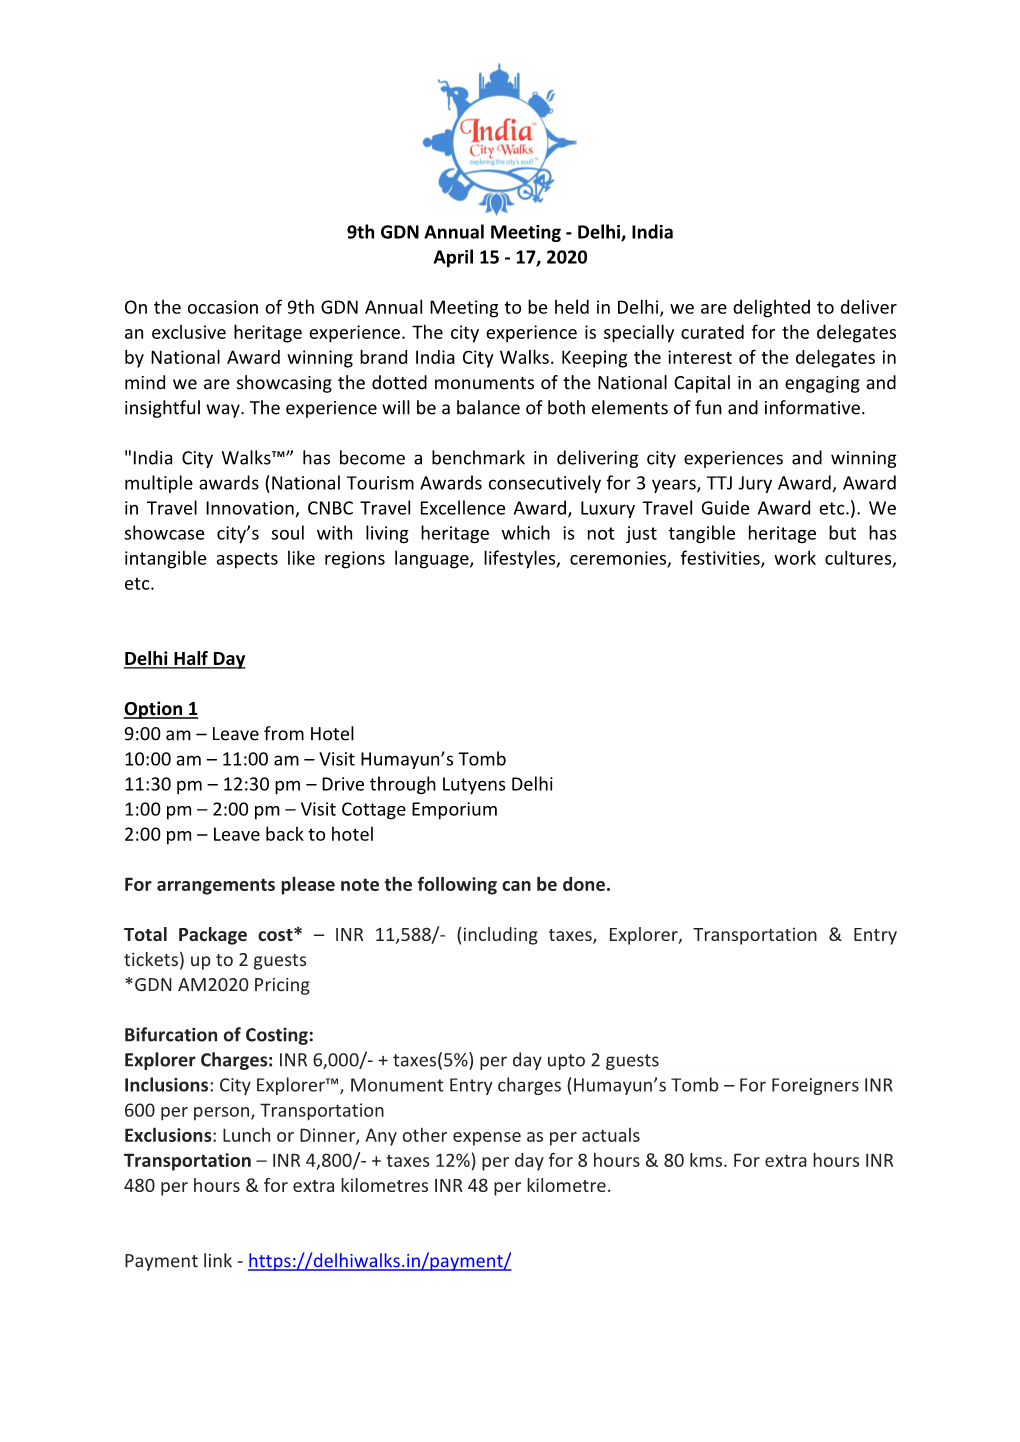 9Th GDN Annual Meeting - Delhi, India April 15 - 17, 2020